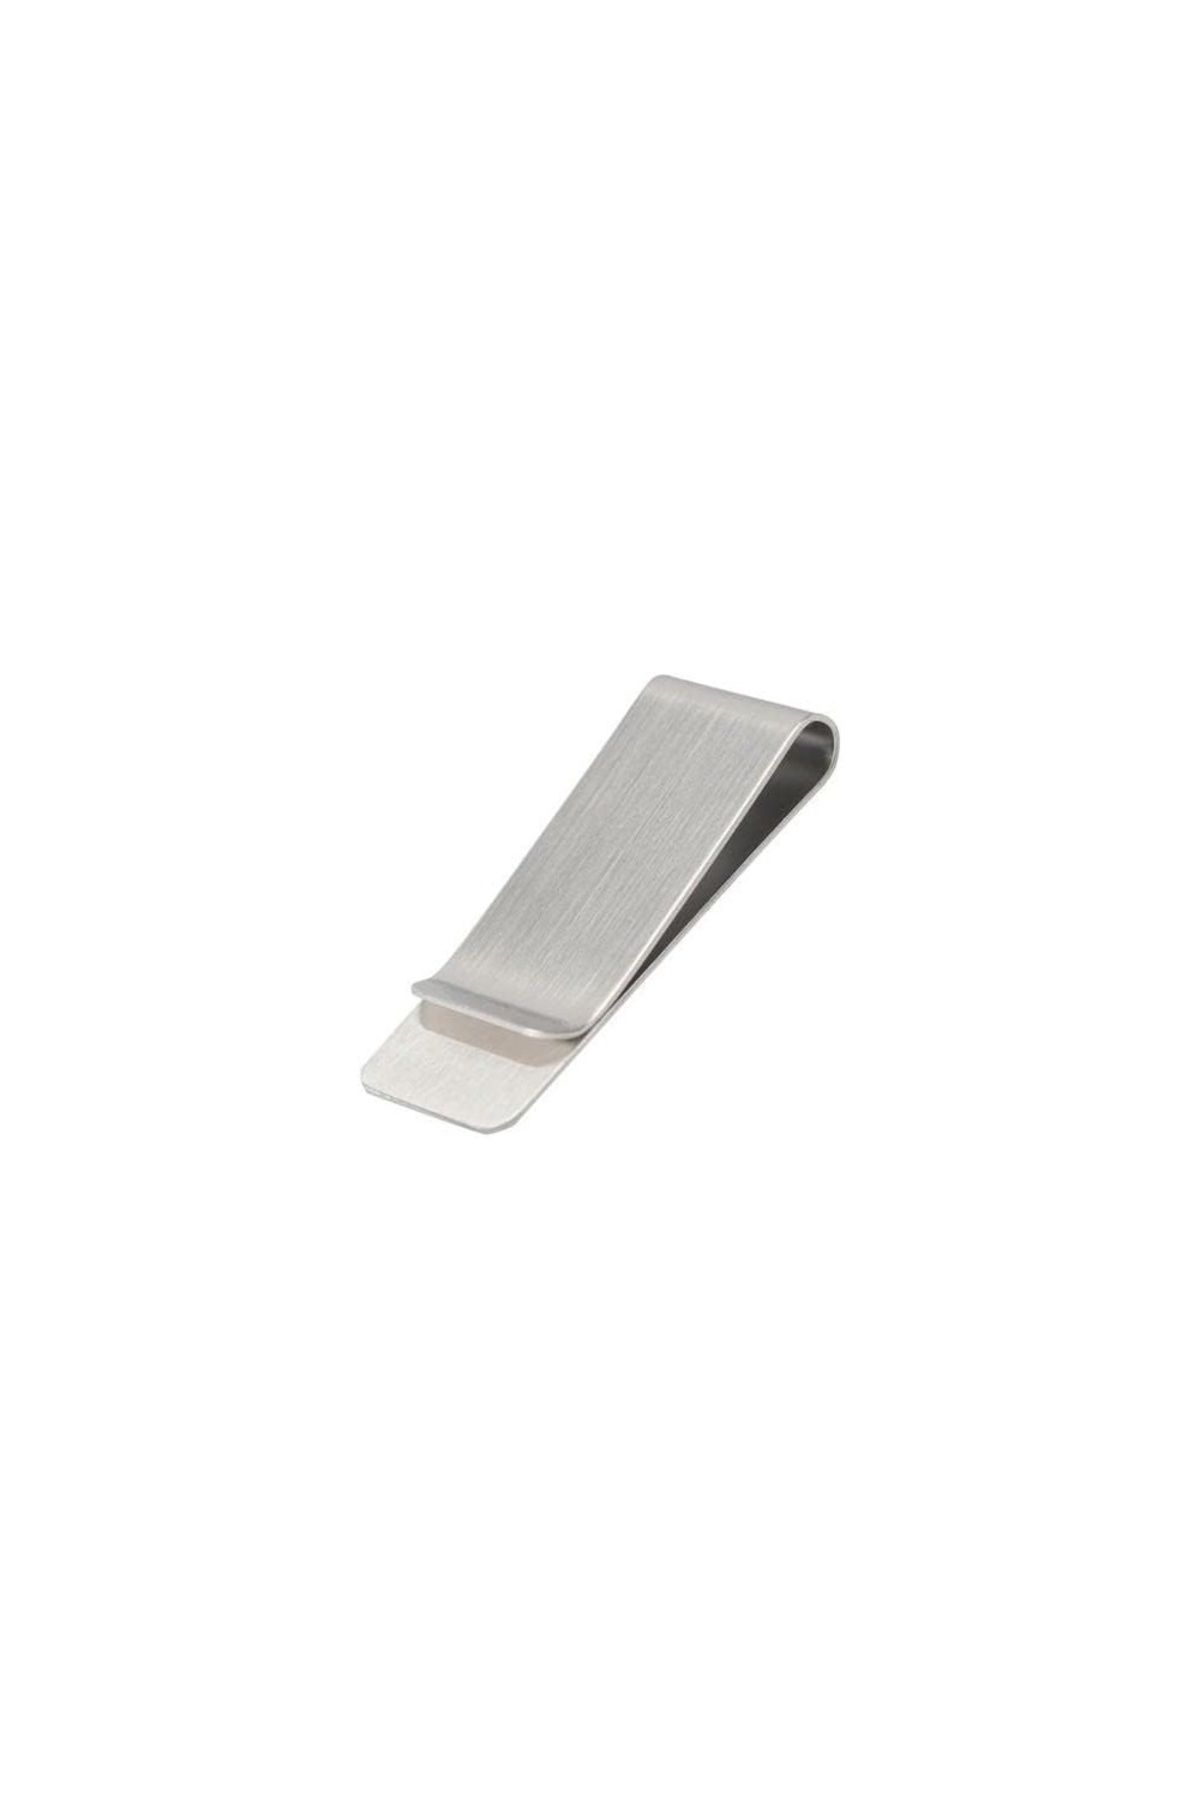 Spelt Metal Kağıt Para Tokası Kart Tutucu Klips Cüzdan Ataş Gümüş 5cm X 1,5cm